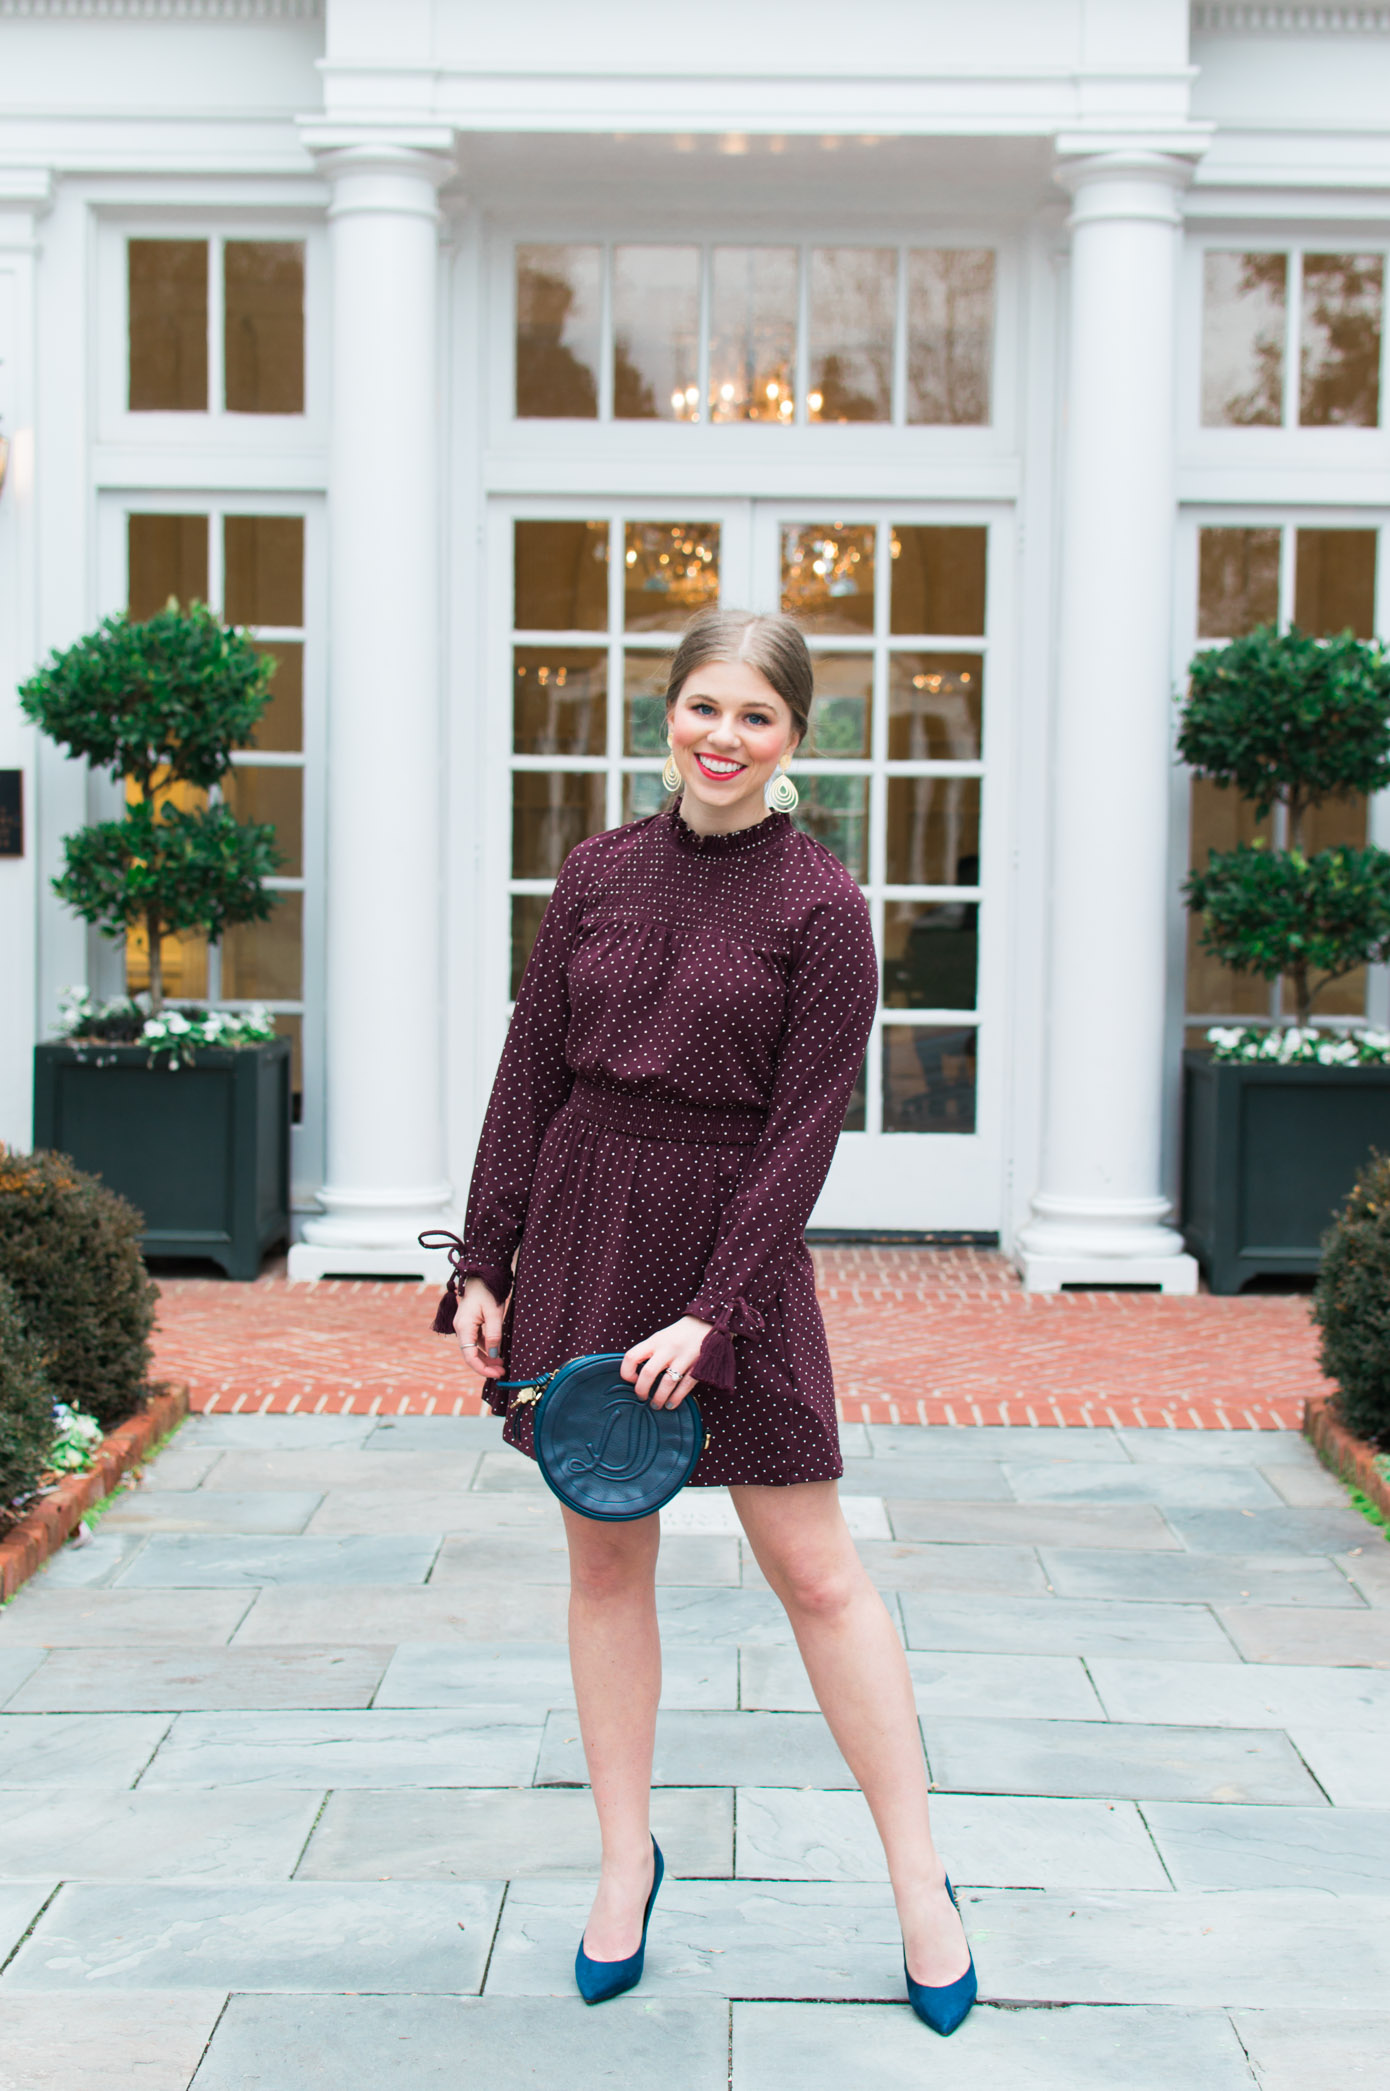 Polka Dot Mini Dress | Chic Winter Date Night Look | Louella Reese Life & Style Blog 